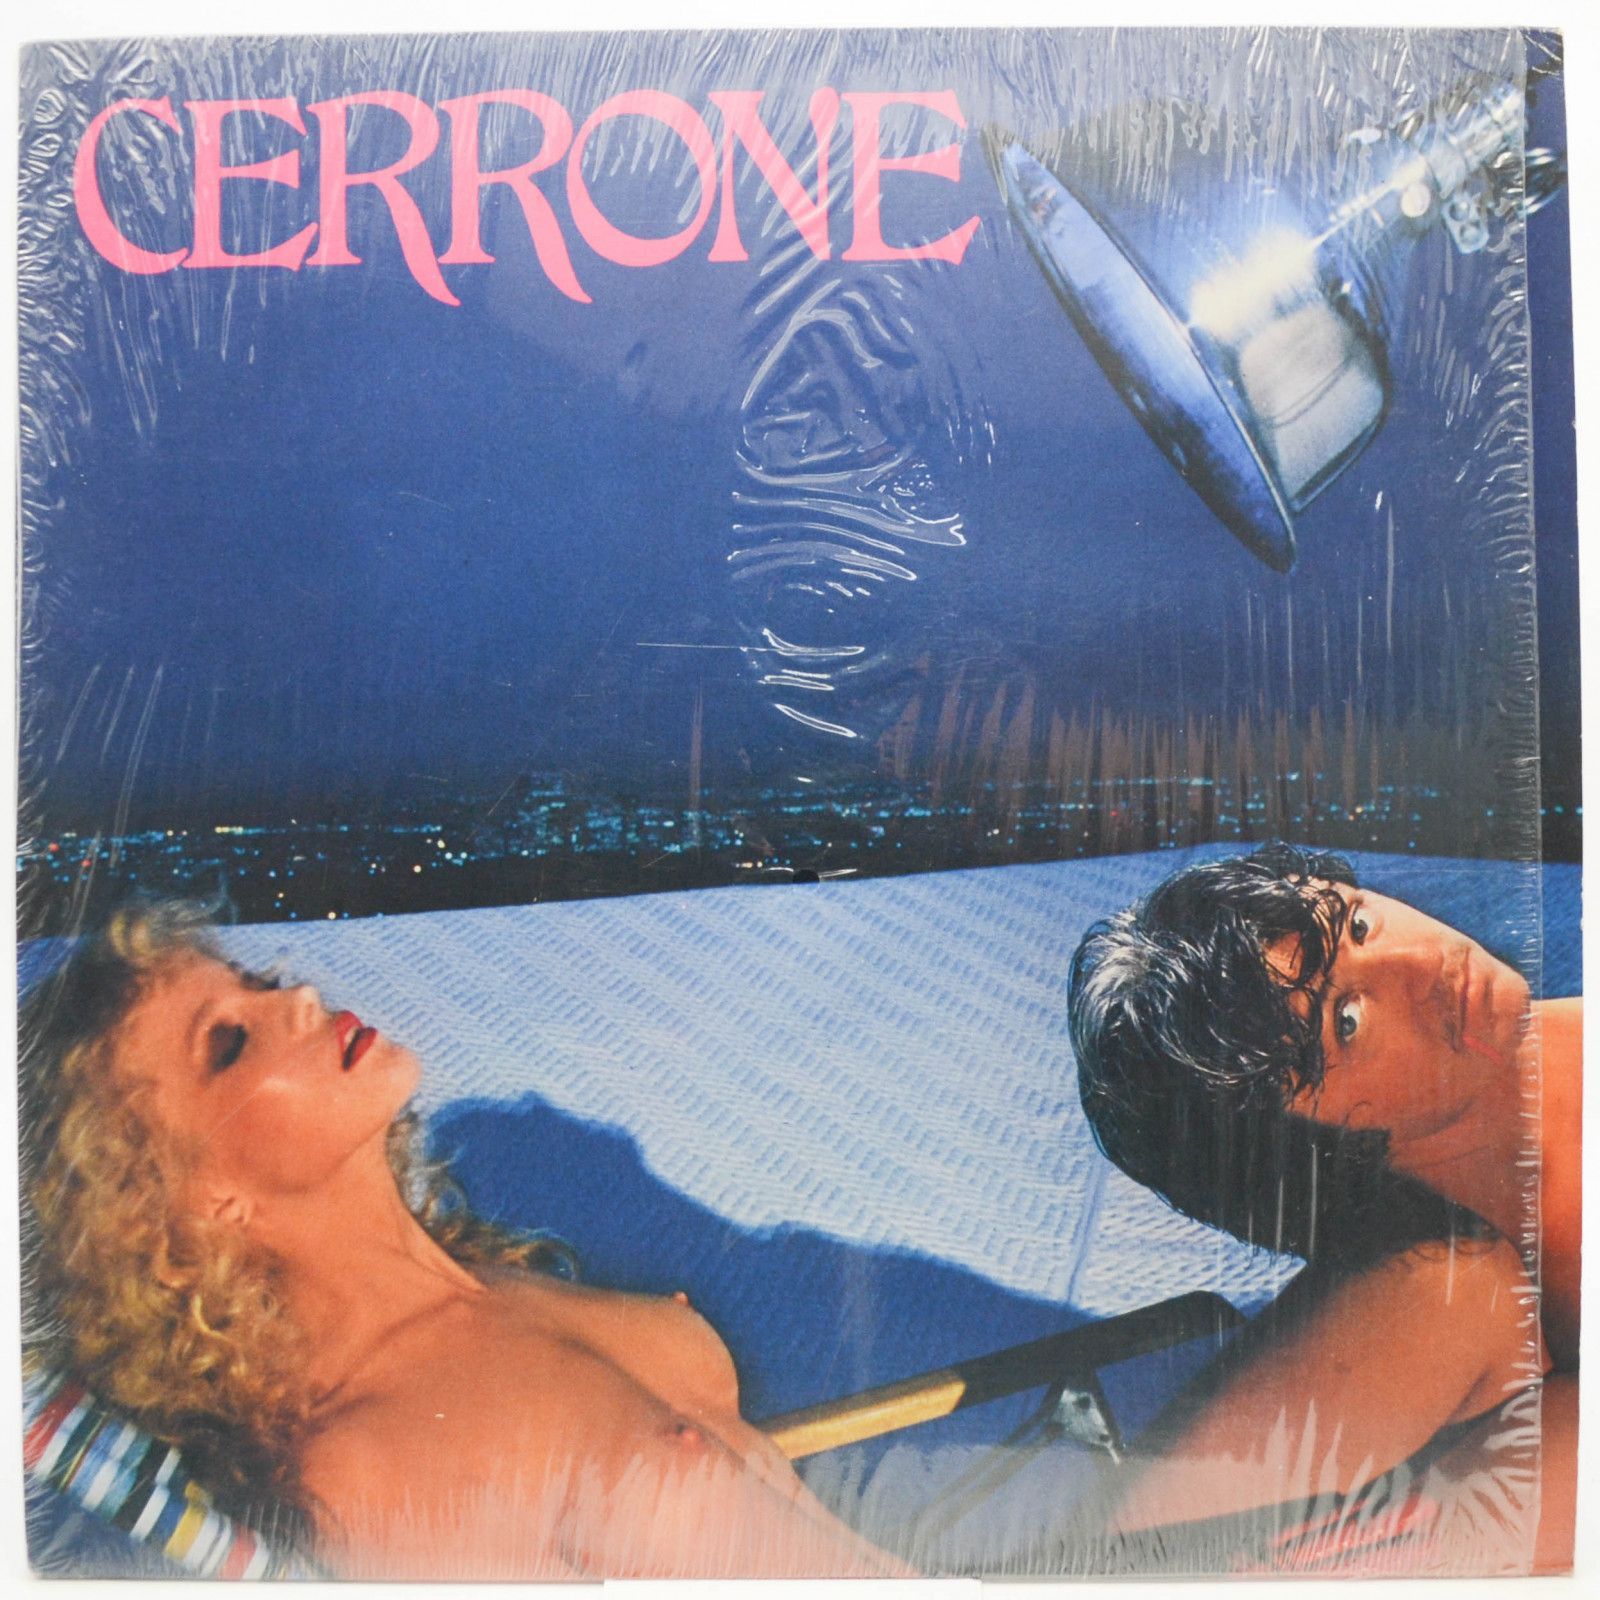 Cerrone — Cerrone VI ''Panic'' (1-st, France), 1980